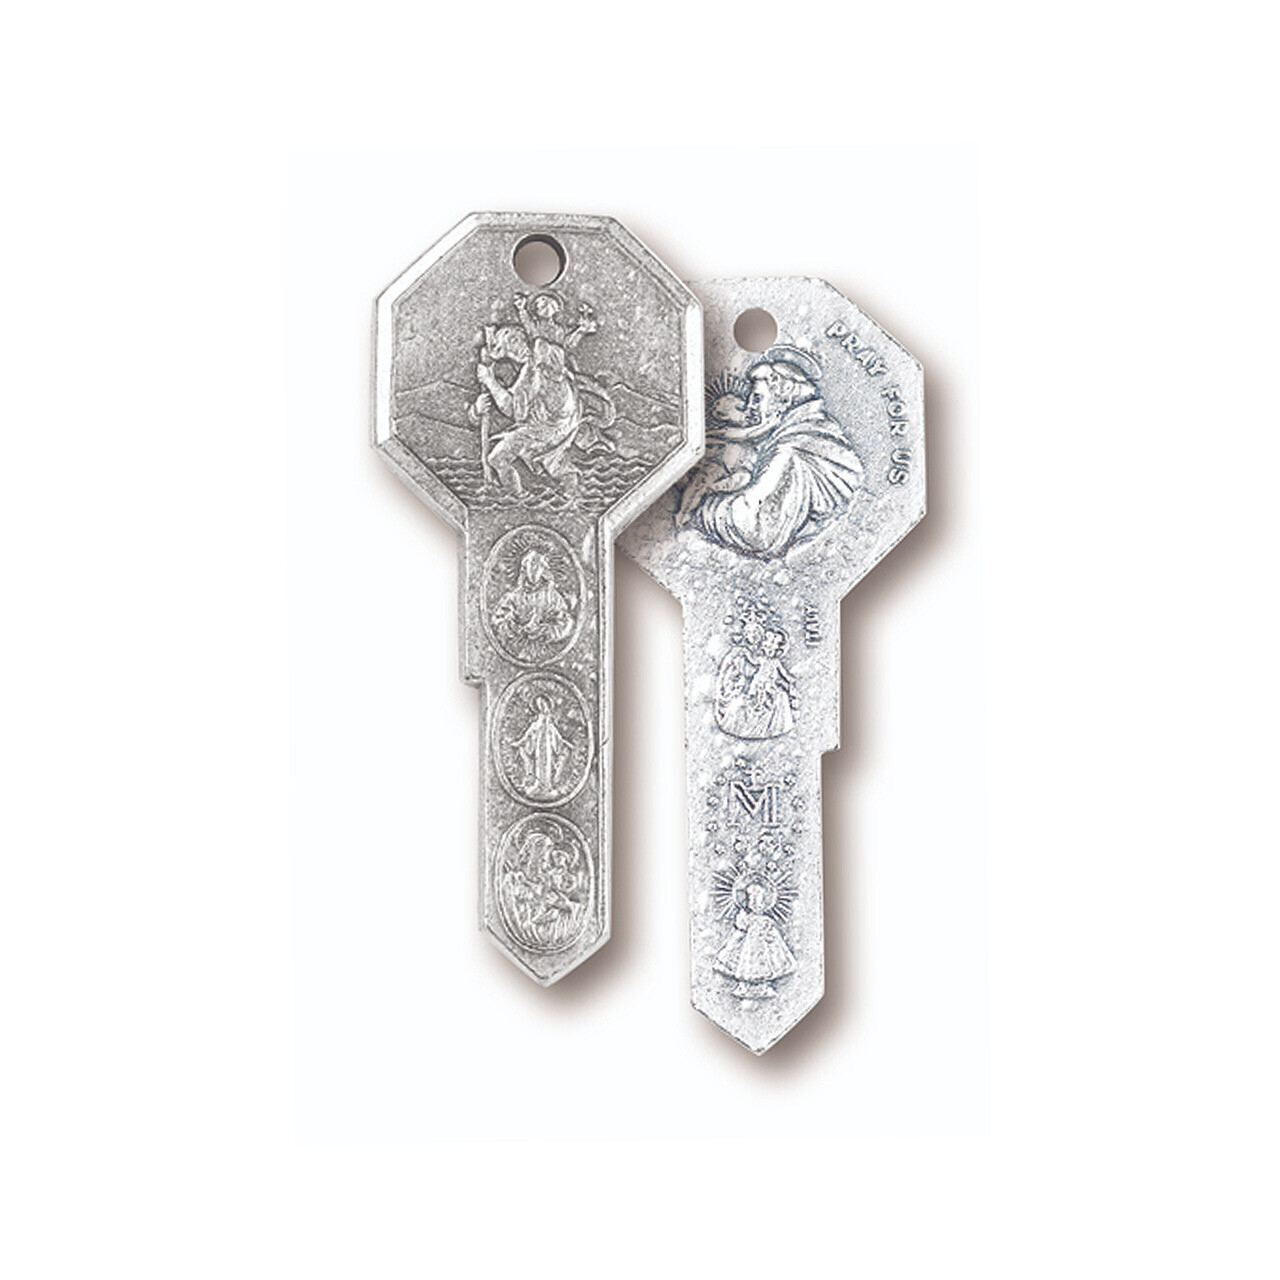 Antique 7 Way Silver Key of Saints